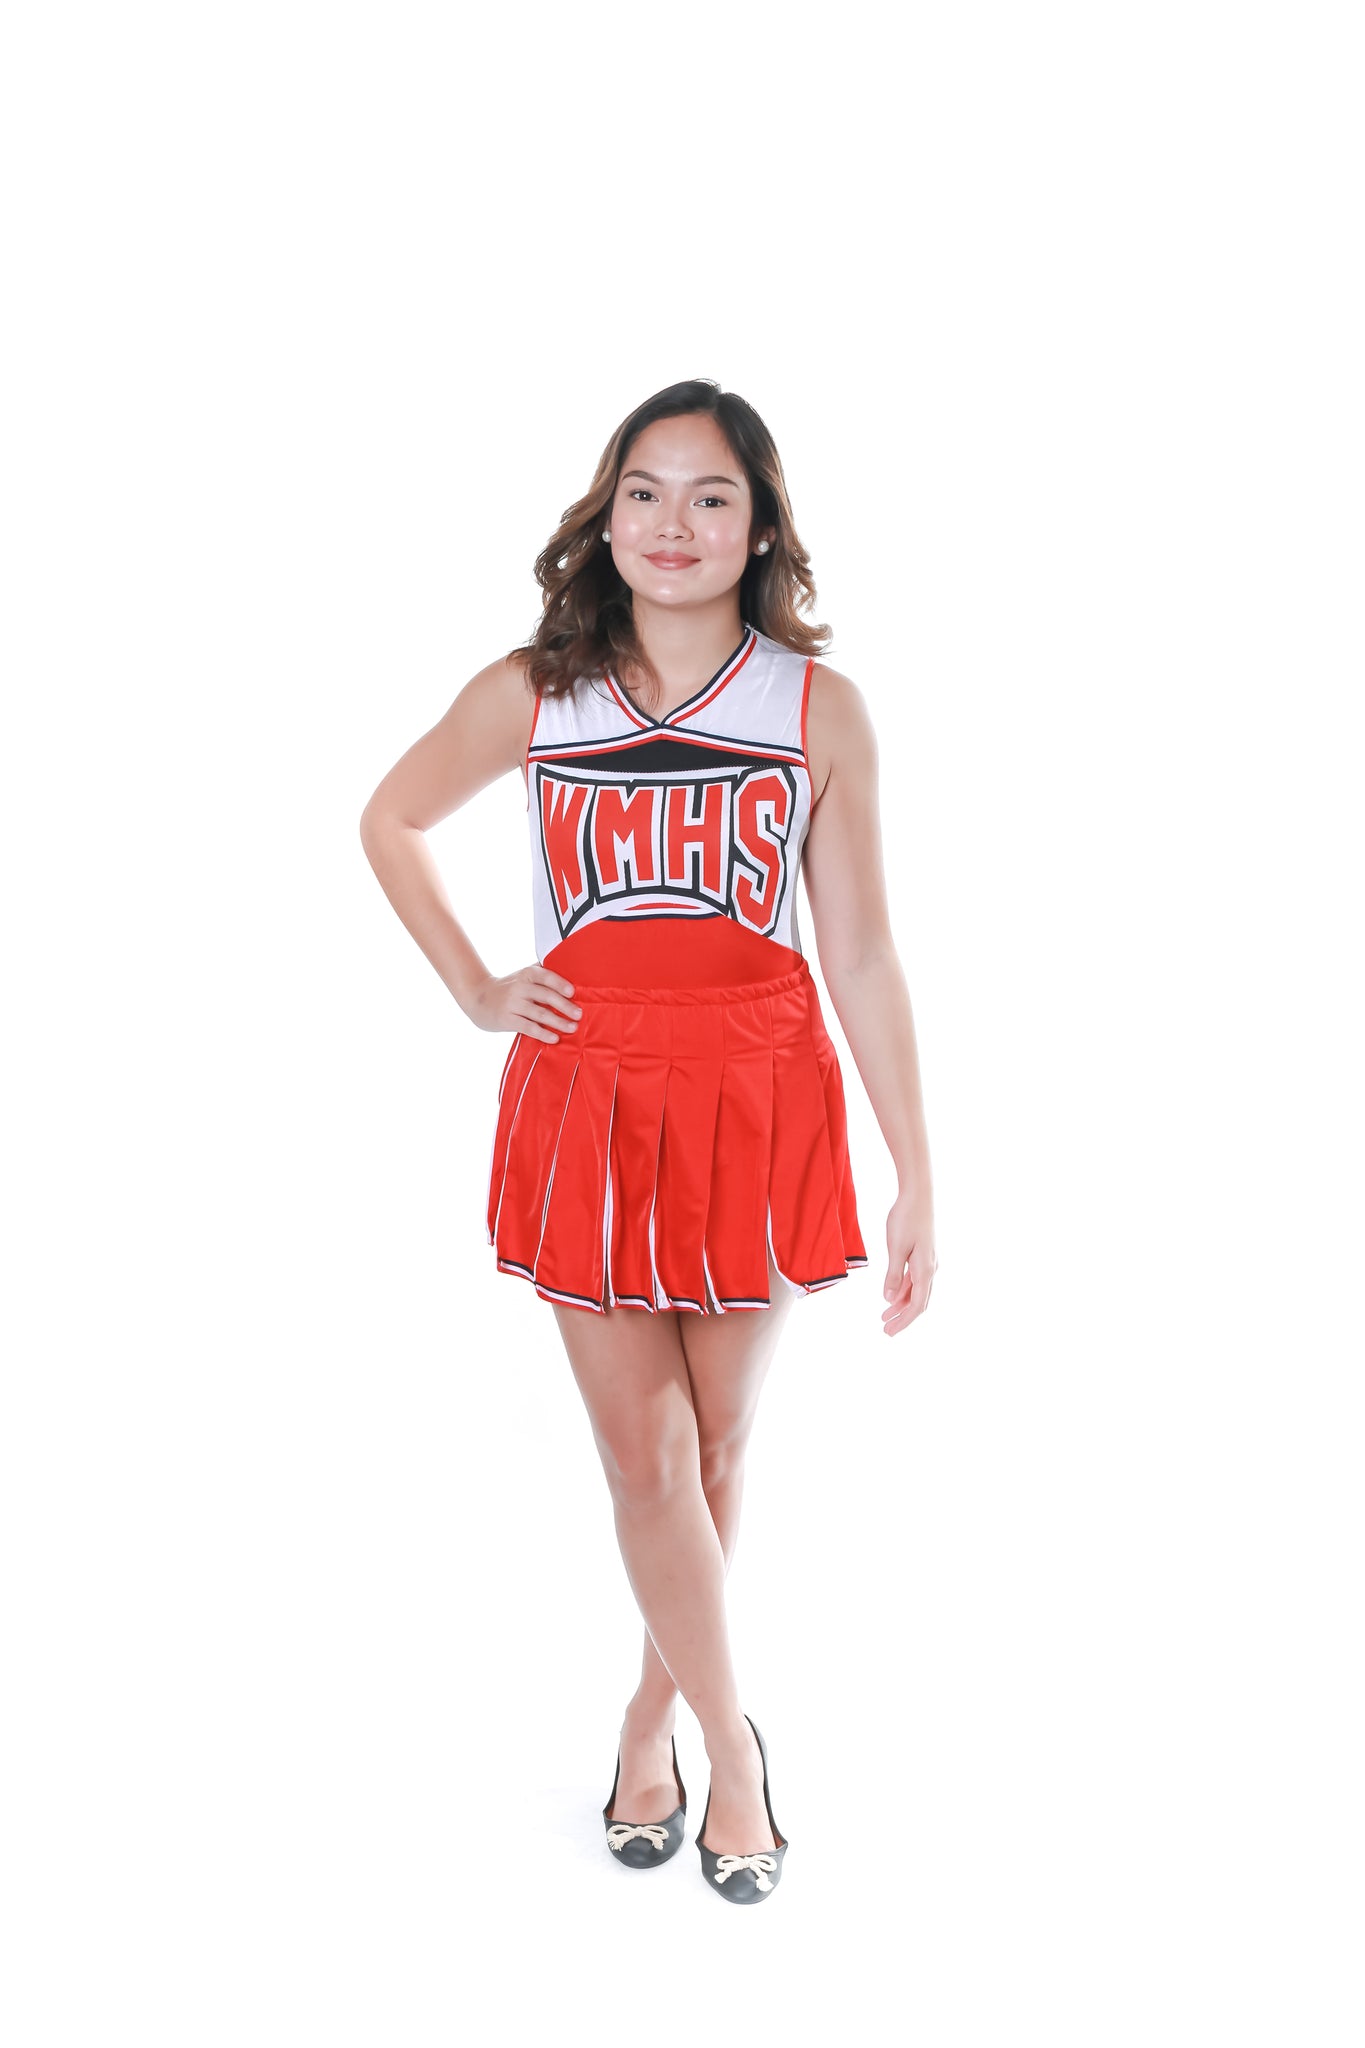 WMHS Cheerleader